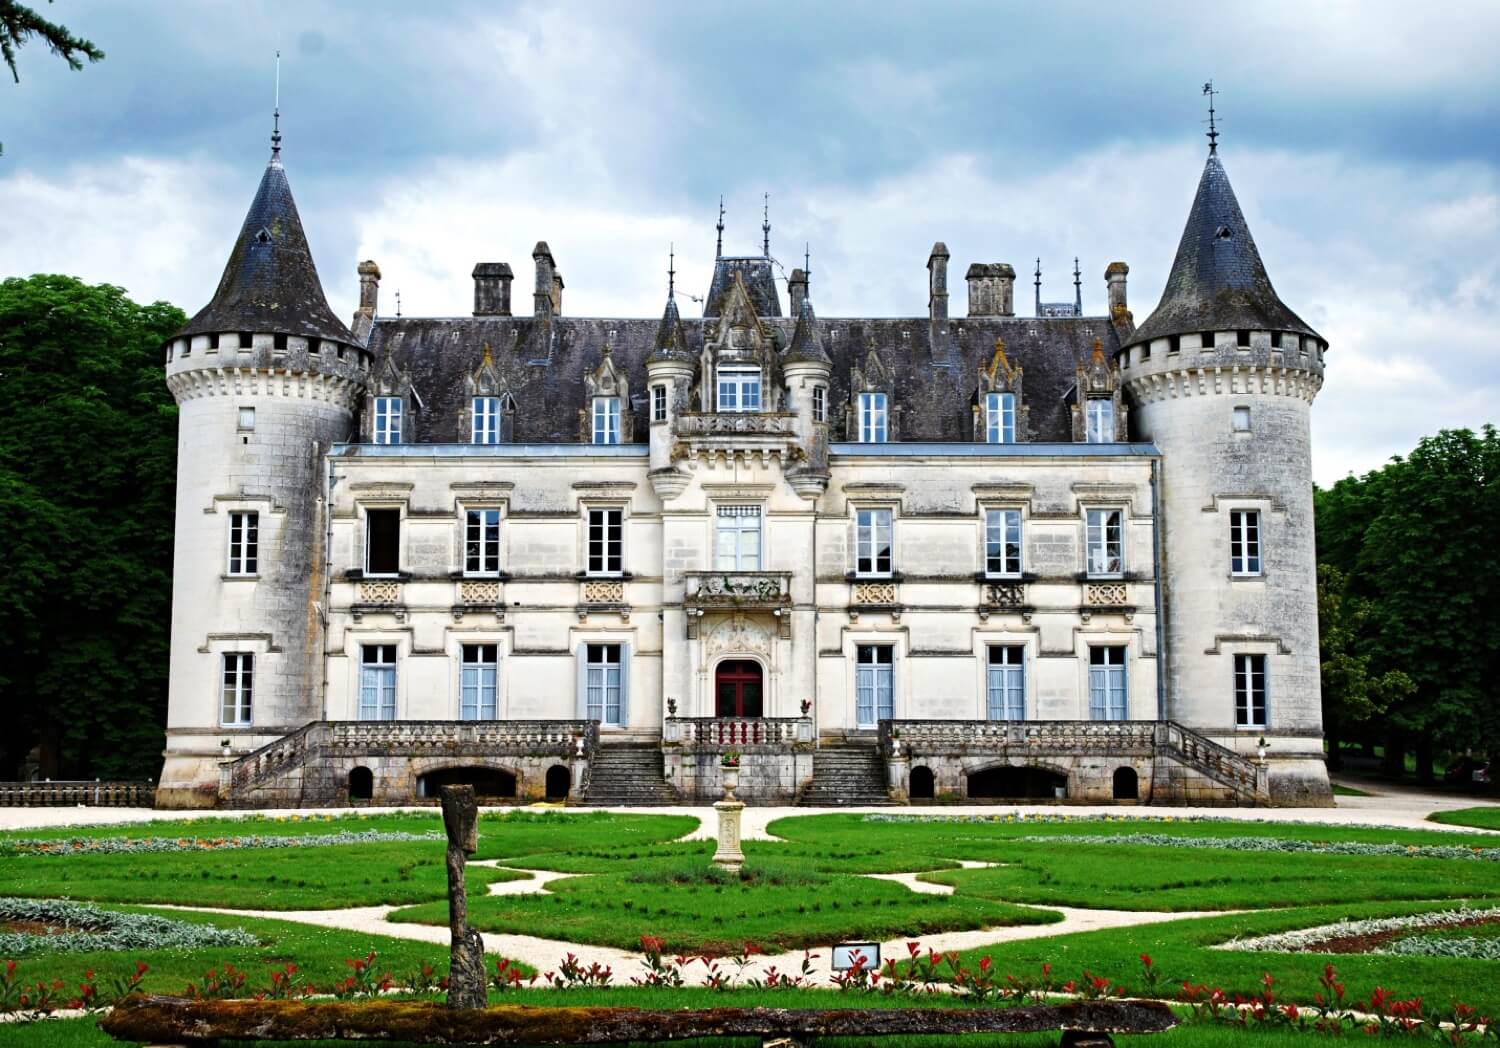 Château de Nieuil